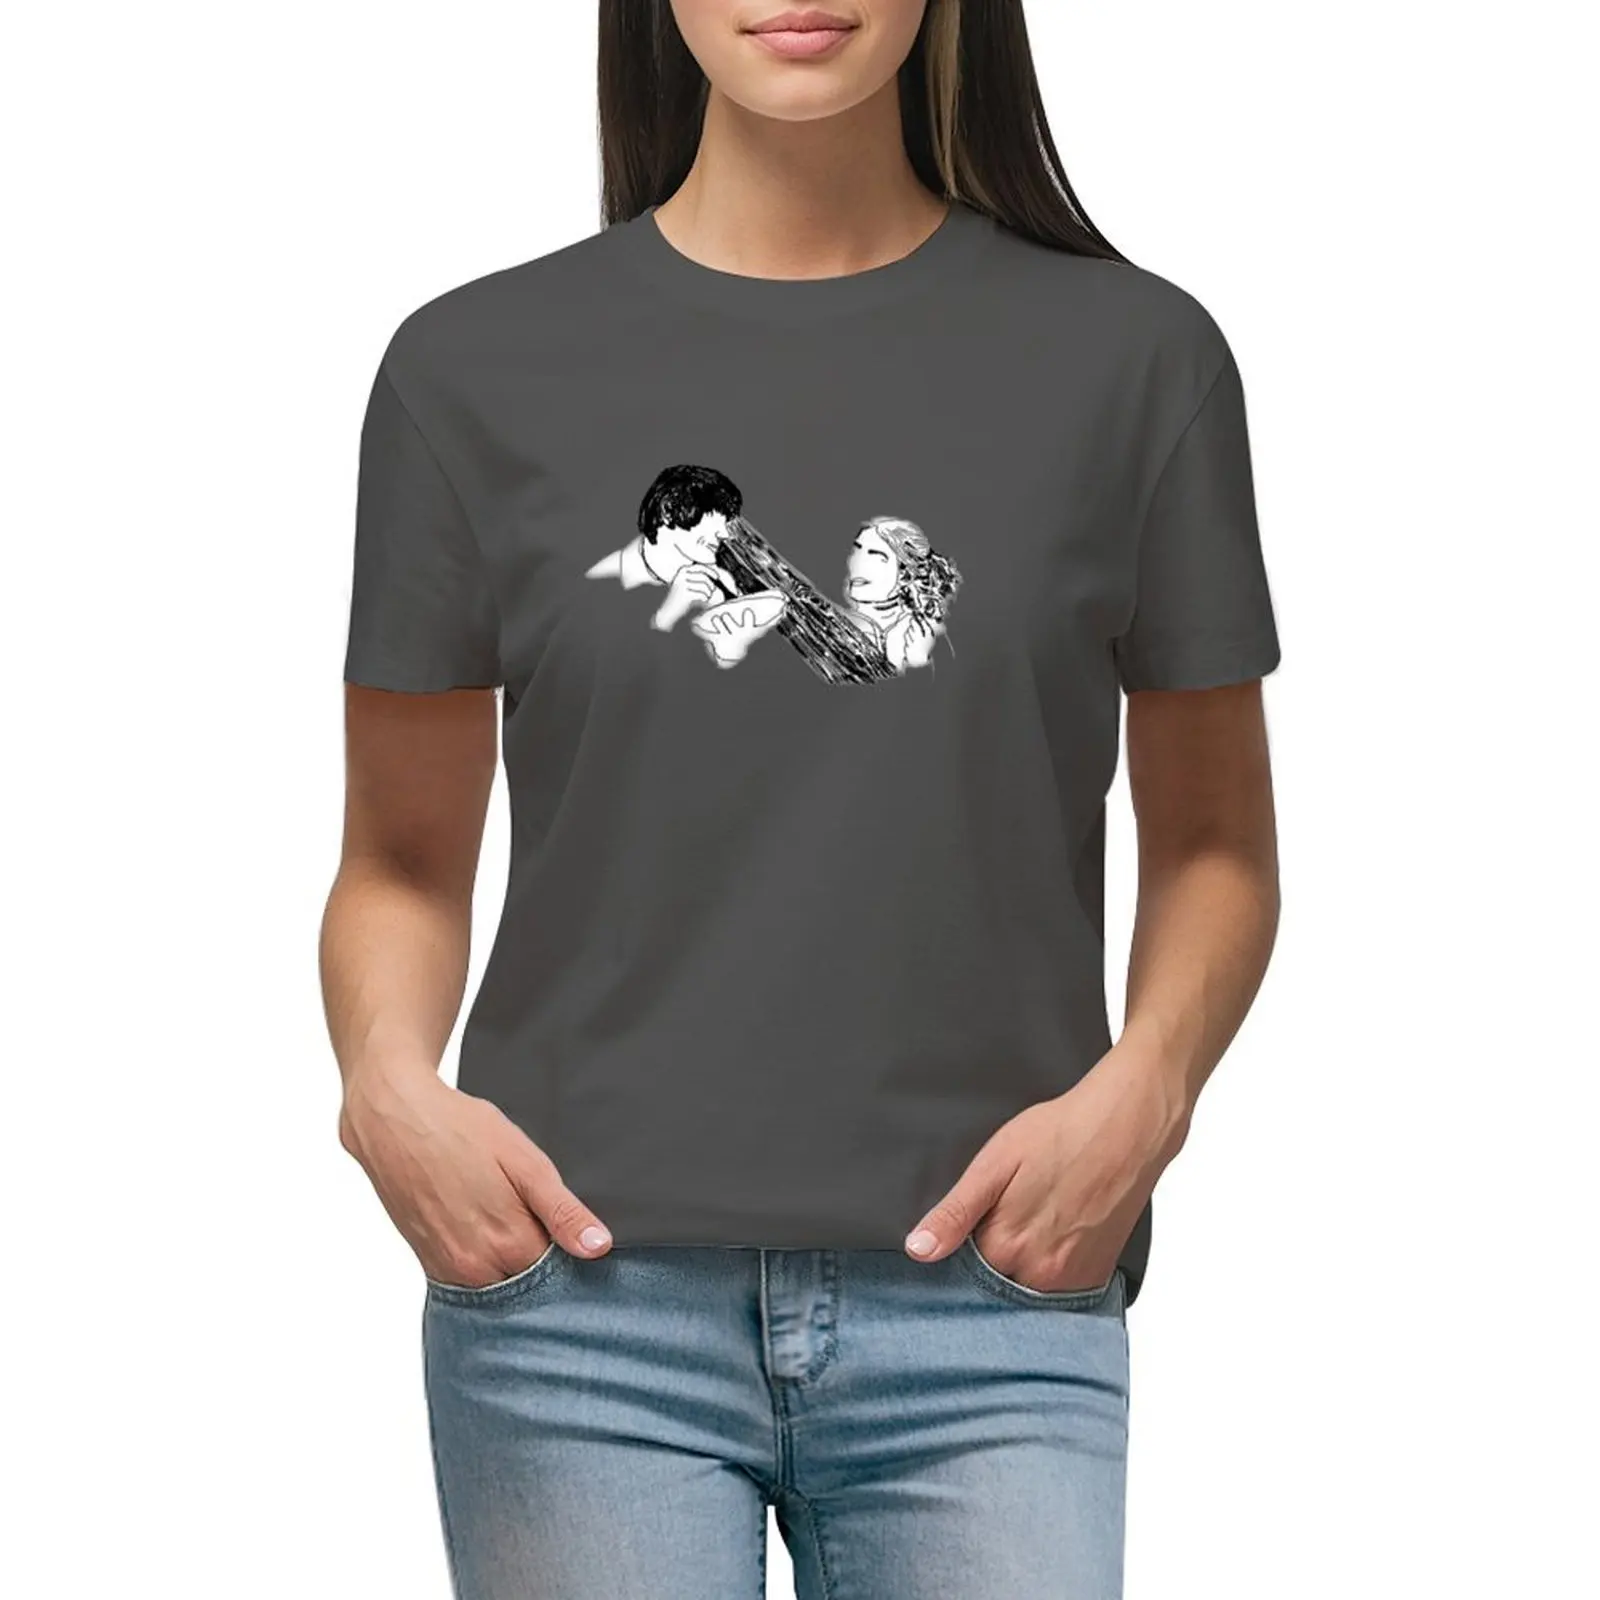 

Eternal Sunshine of the Spotless Mind - “Enjoy It.” T-shirt oversized Short sleeve tee black t shirts for Women